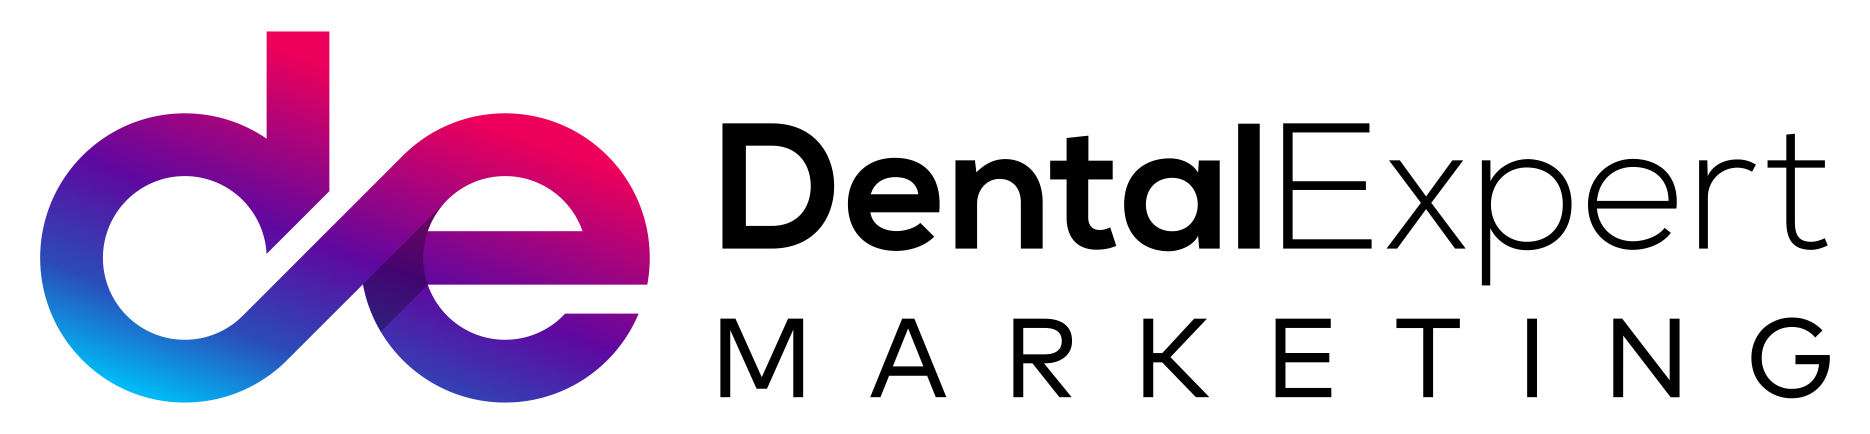 Dental Expert Marketing